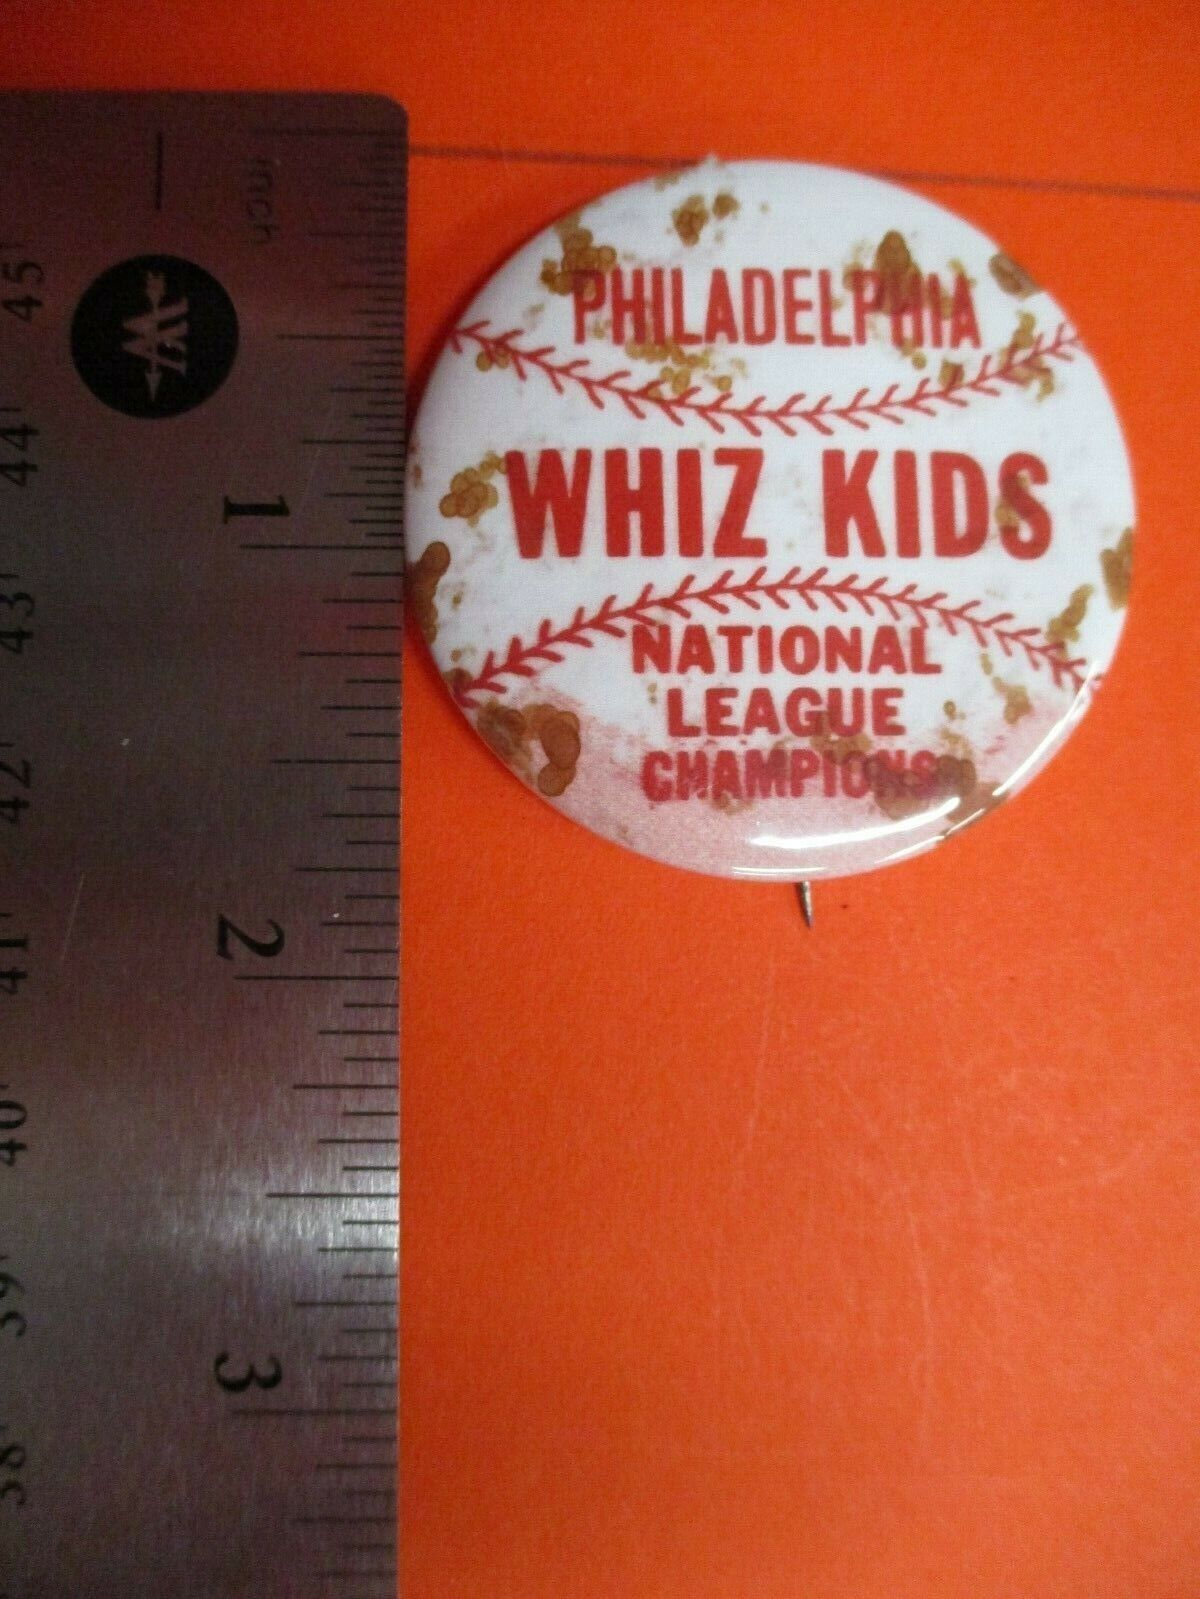 Philadelphia Phillies Whiz Kids NL Champions Reproduction Button Pin